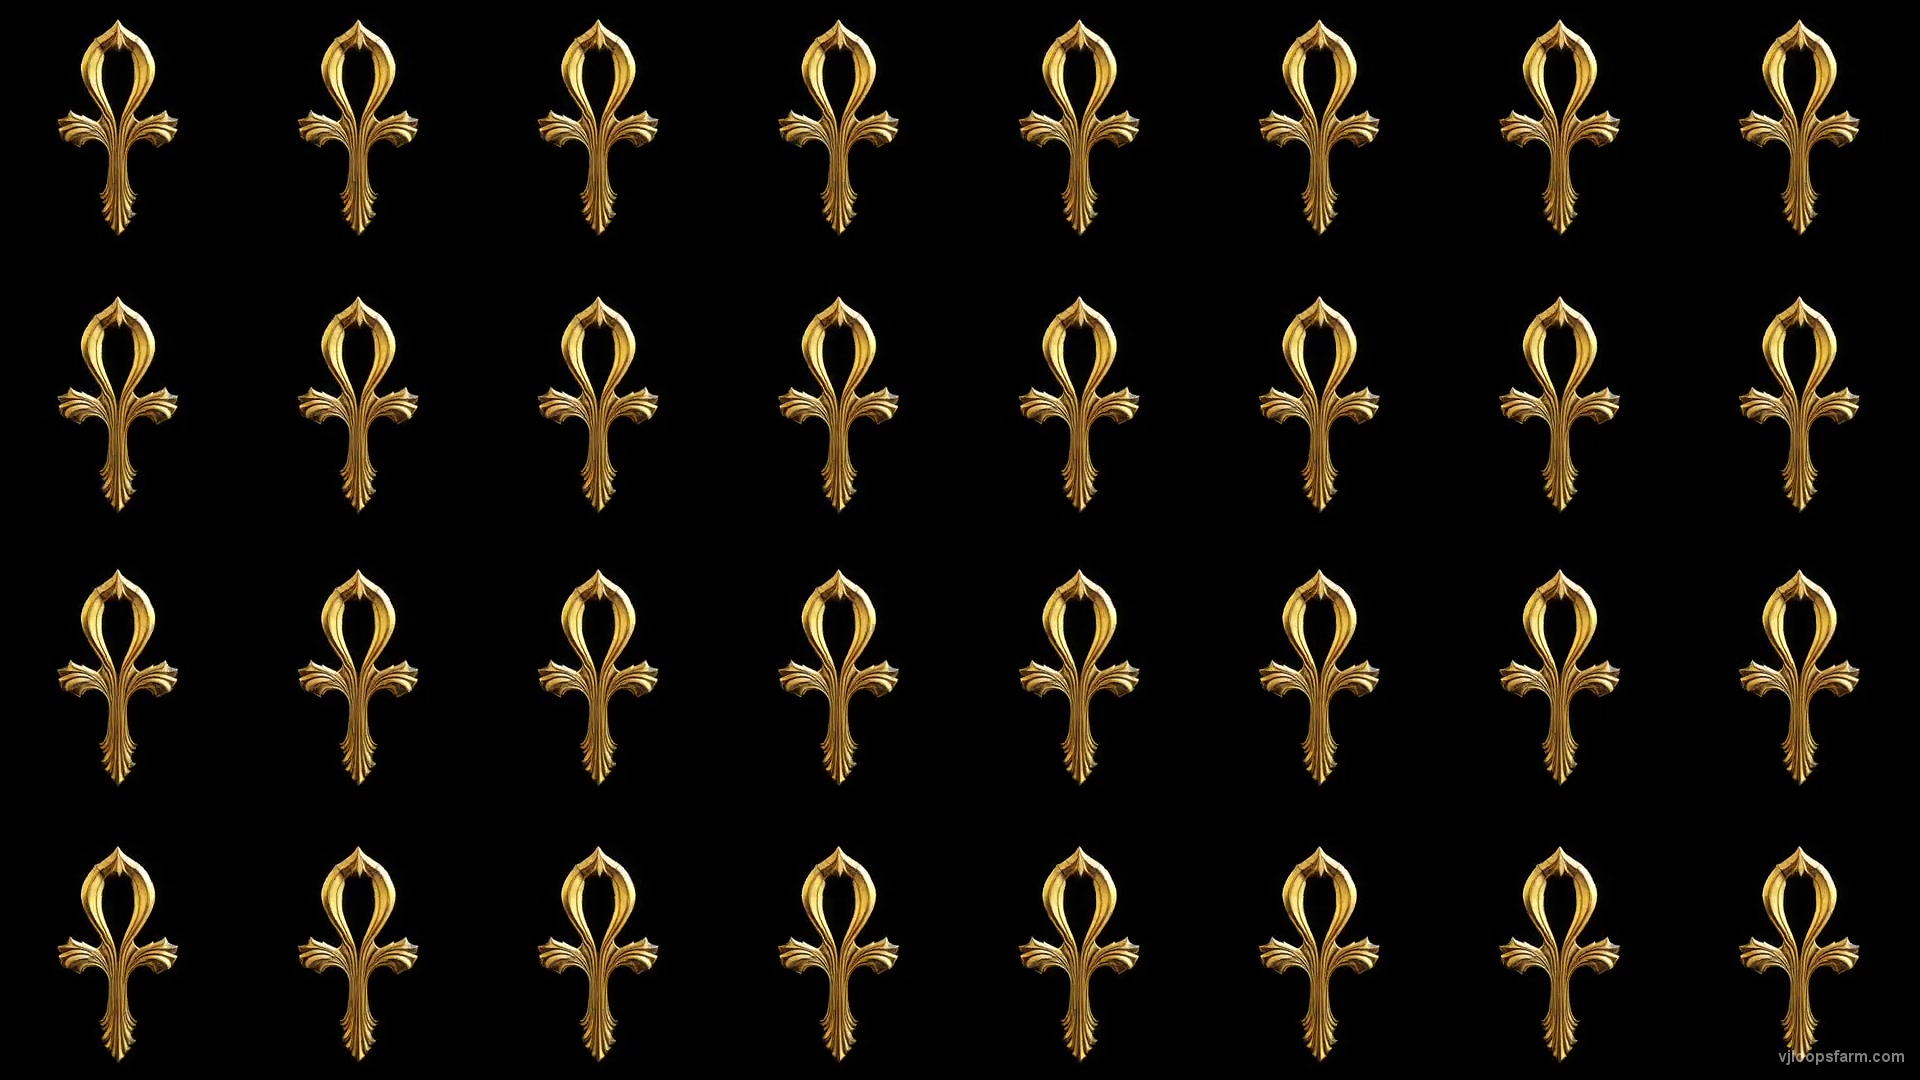 Art Deco golden Ank Cross elements Grid Pattern isolated on black background Ultra HD VJ Loop